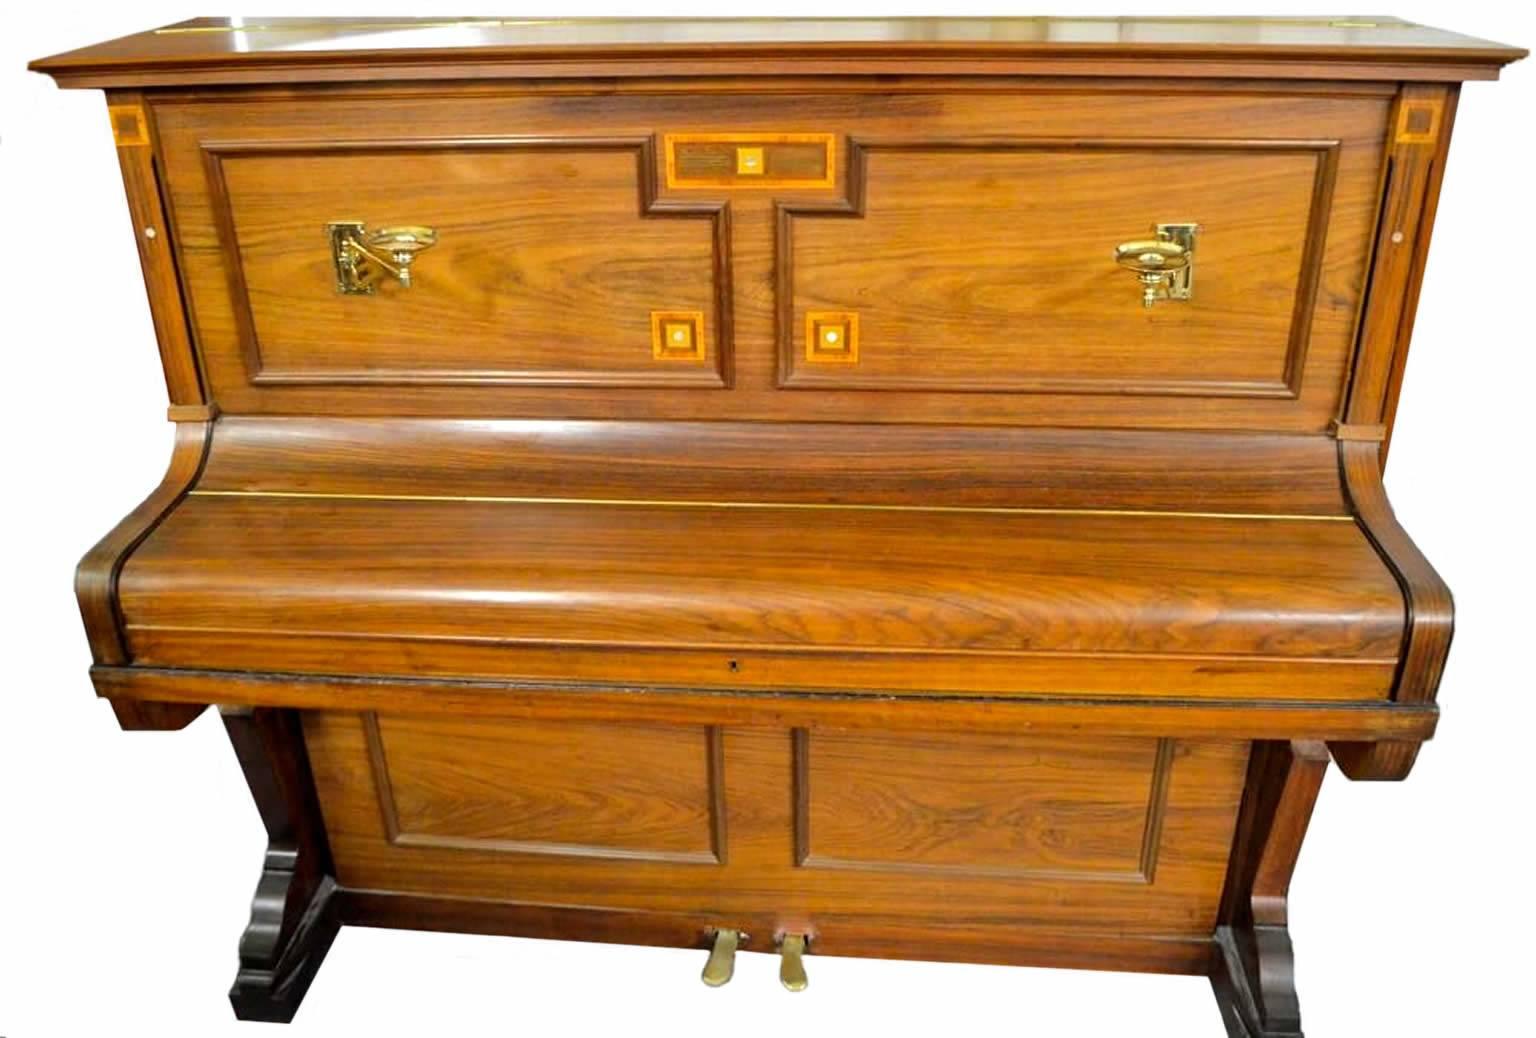 German Bogs & Voight Upright Piano in Walnut Art Deco Finish For Sale